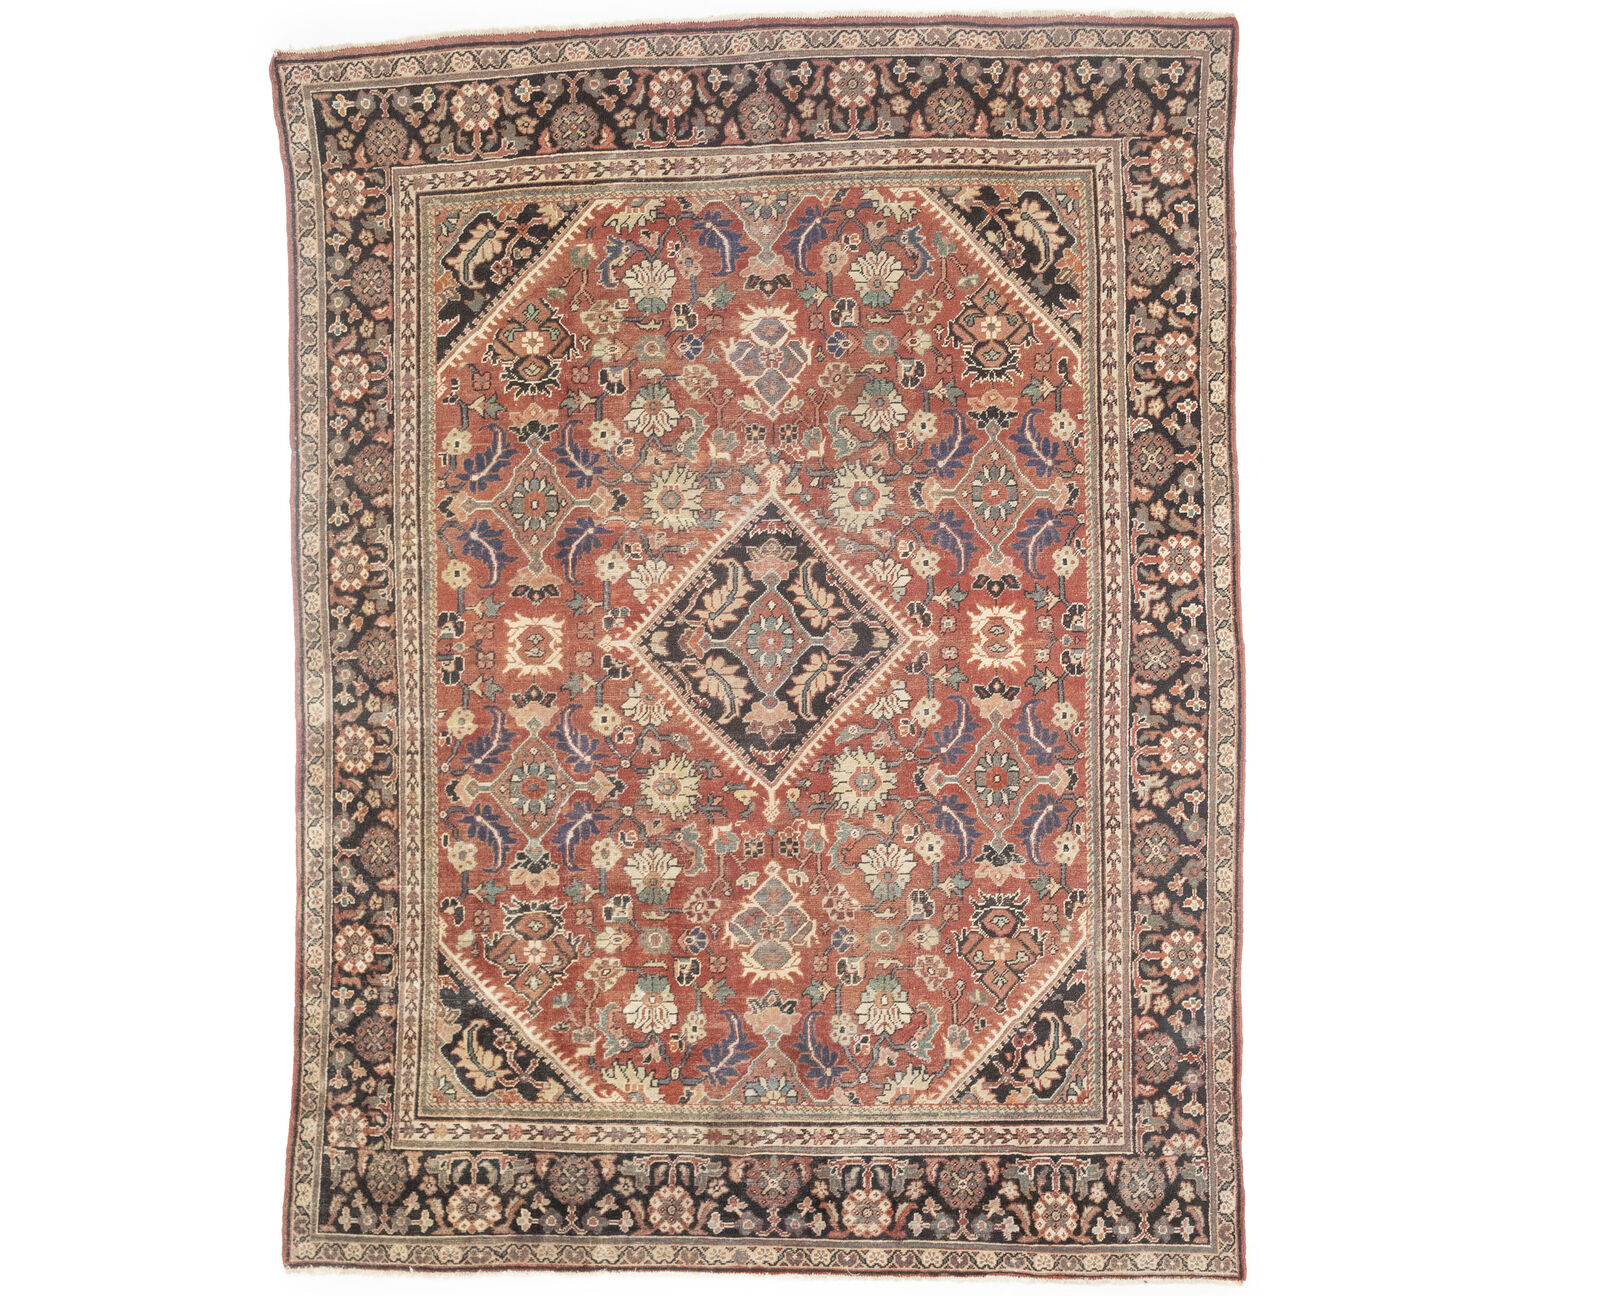 Handmade Floral Style Large 9X12 Medallion Semi Antique Oriental Rug Wool Carpet